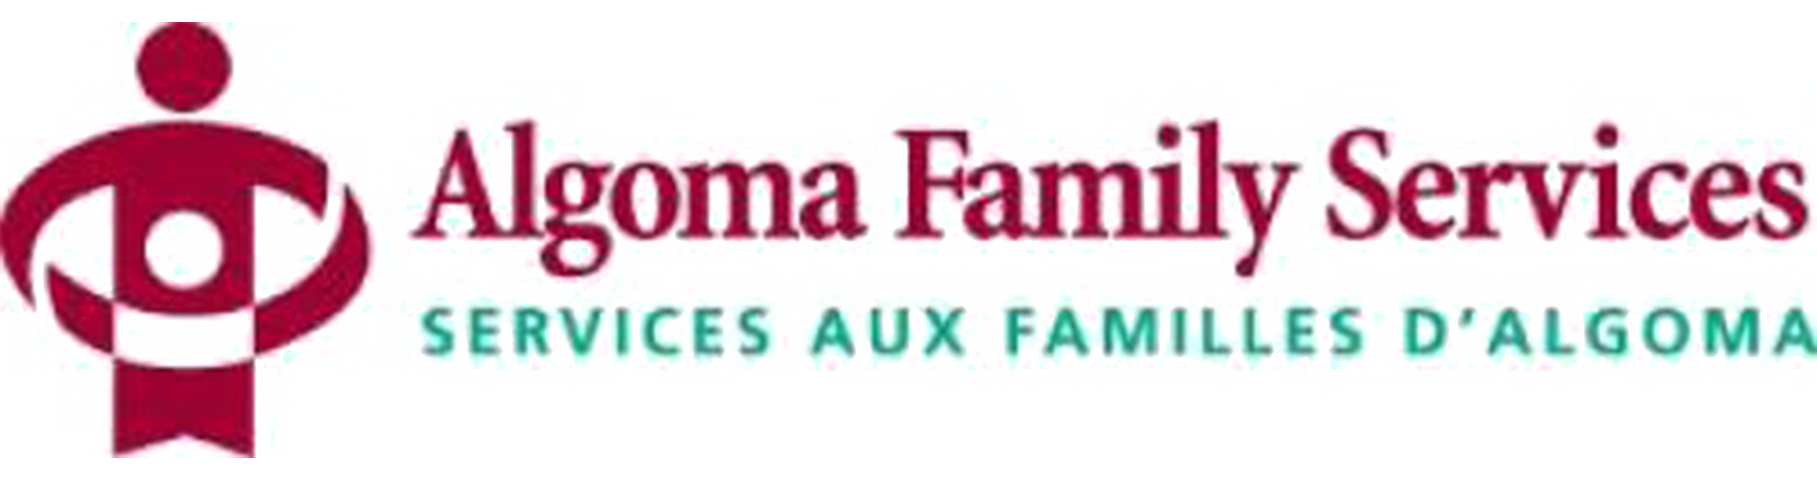 Algoma Family Services